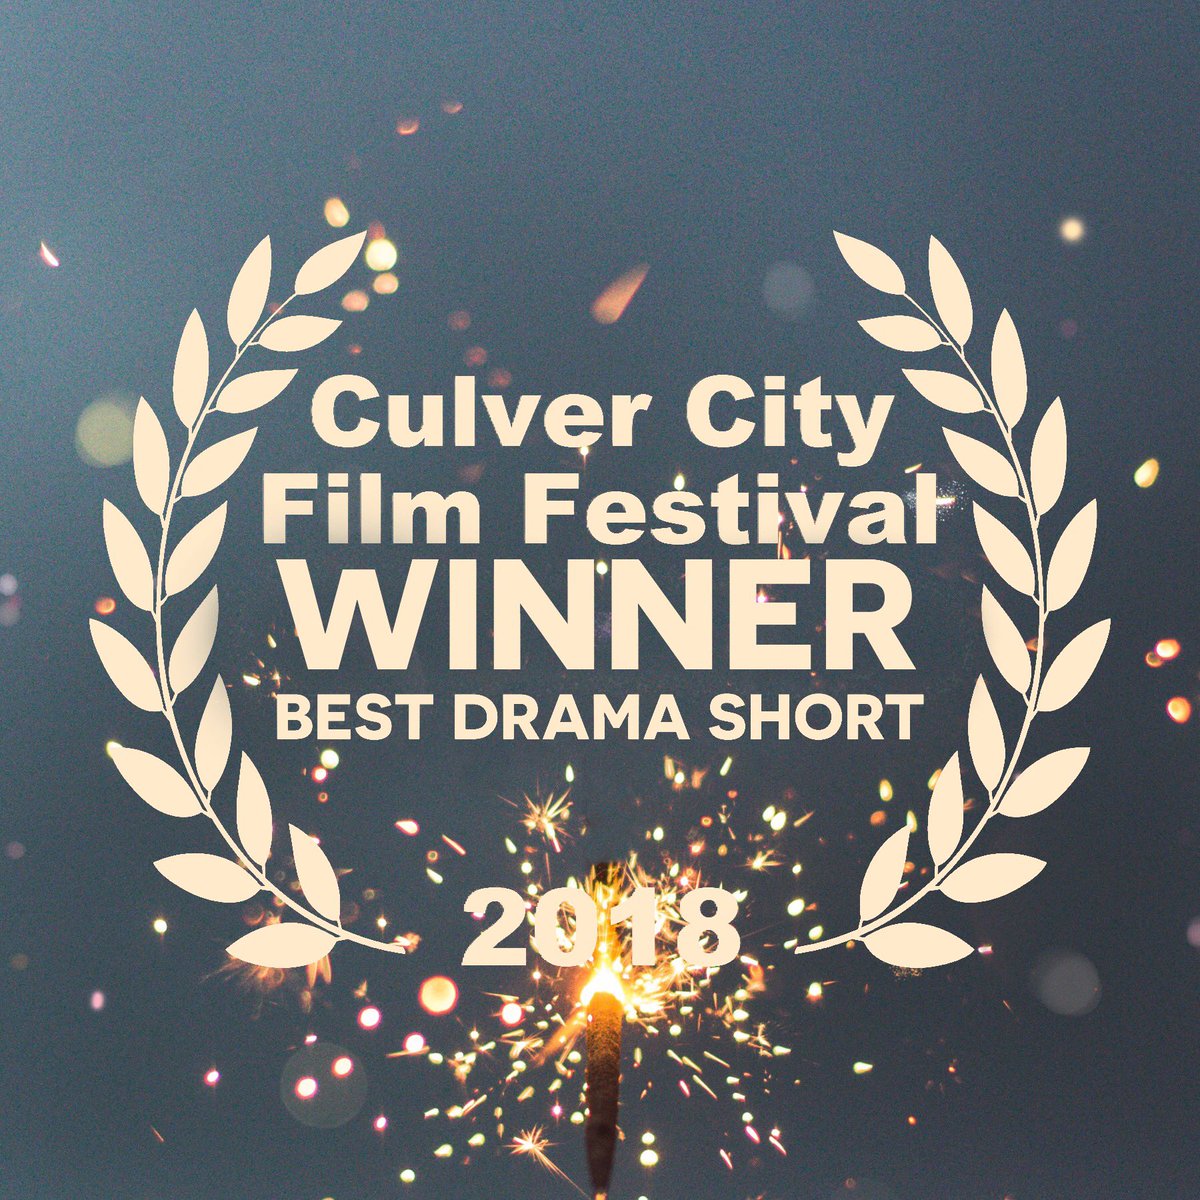 Thank you, @culvercityff !!! #awardwinningfilm #FilmFestival #Thankful #excited #Winning #femalefilmmaker #bam